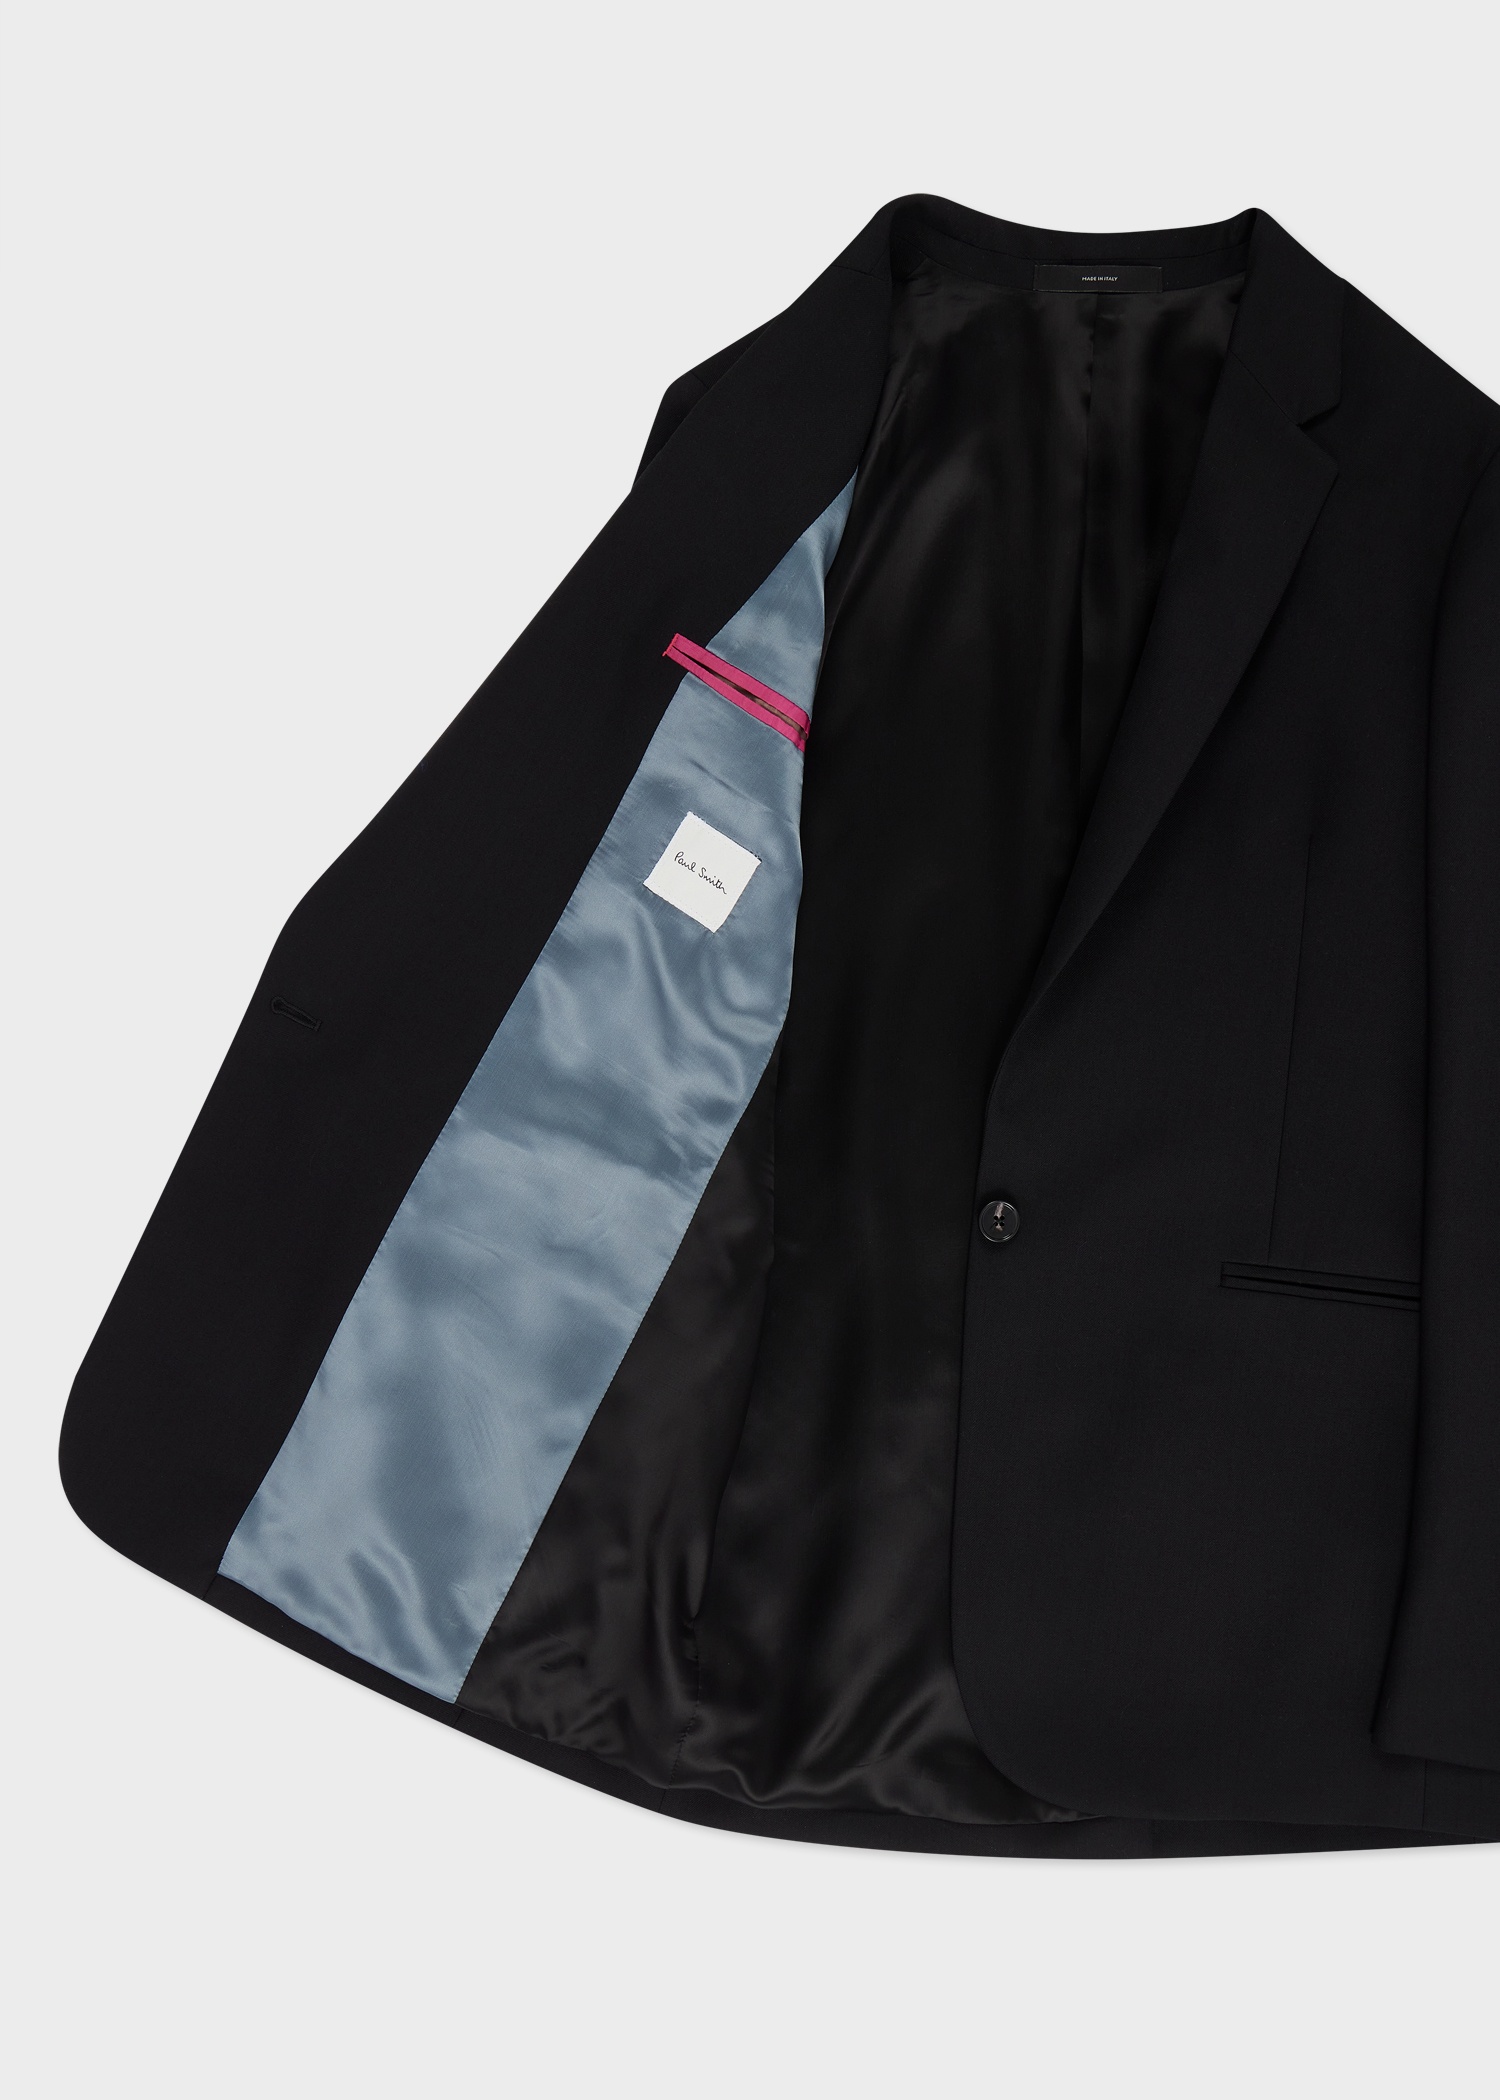 A Suit To Travel In - Women's Black Wool Travel Blazer - 2